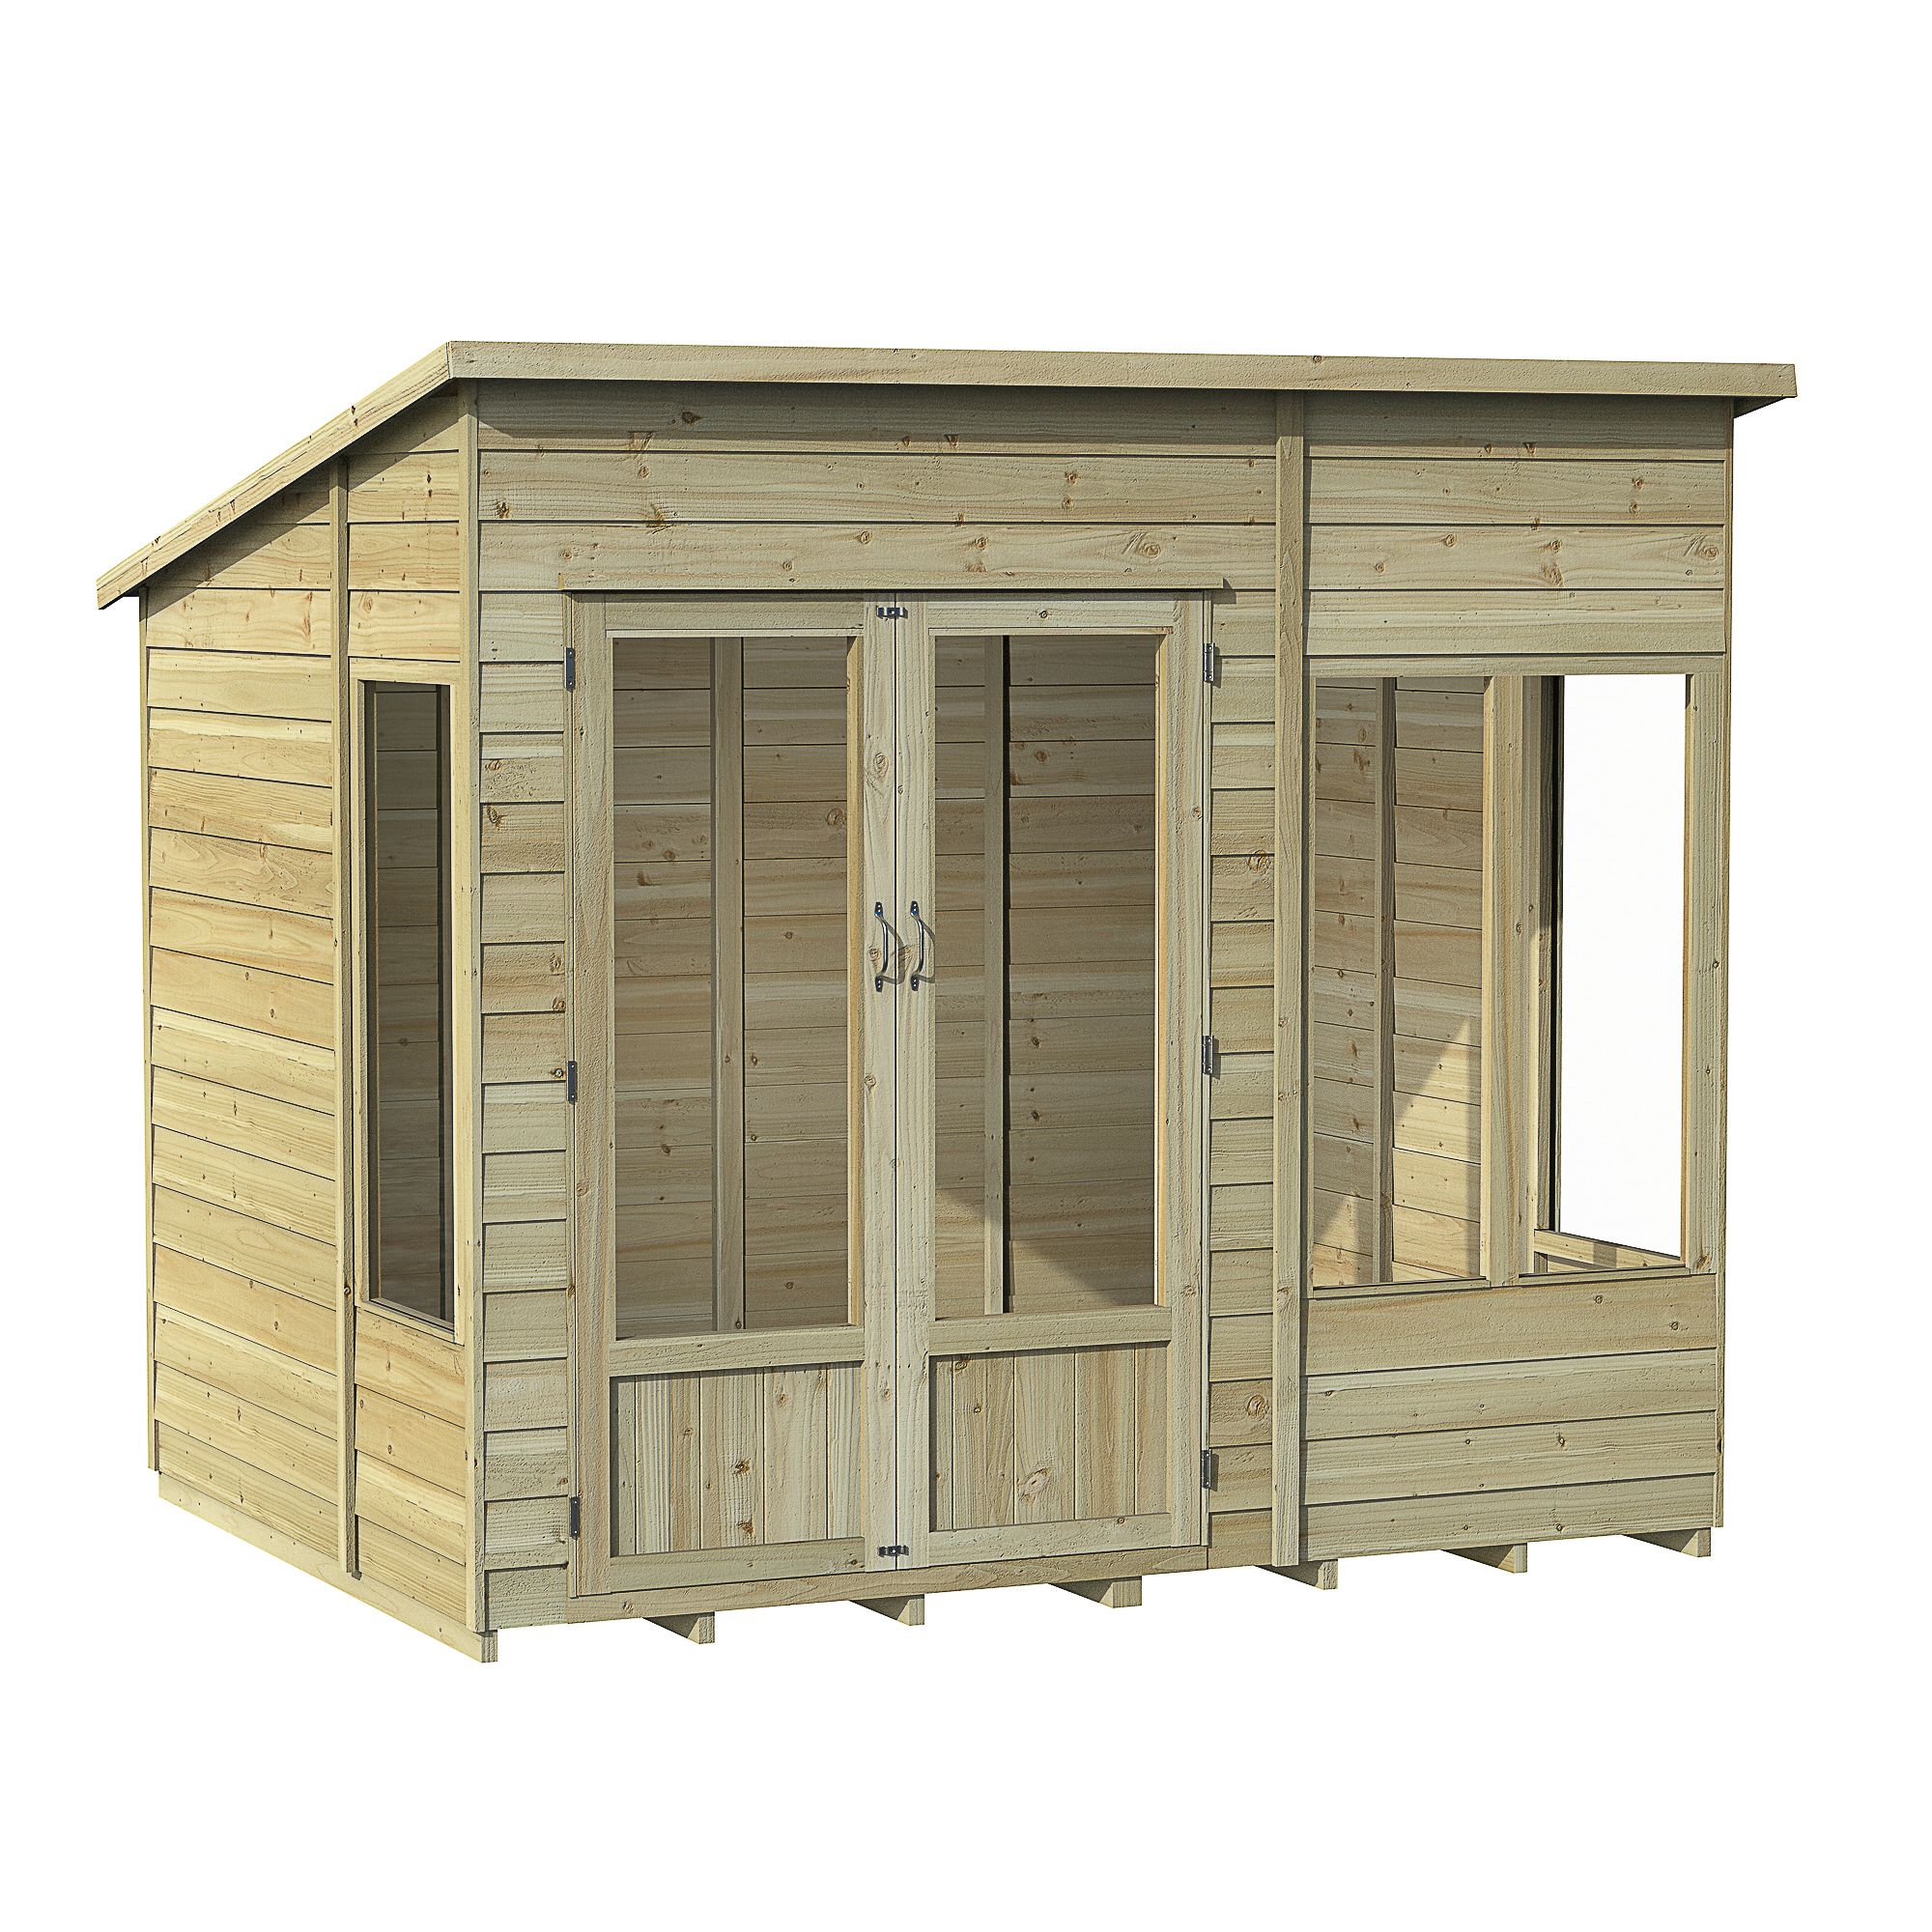 Forest Garden Oakley 8x6 ft with Double door & 4 windows Pent Solid wood Summer house